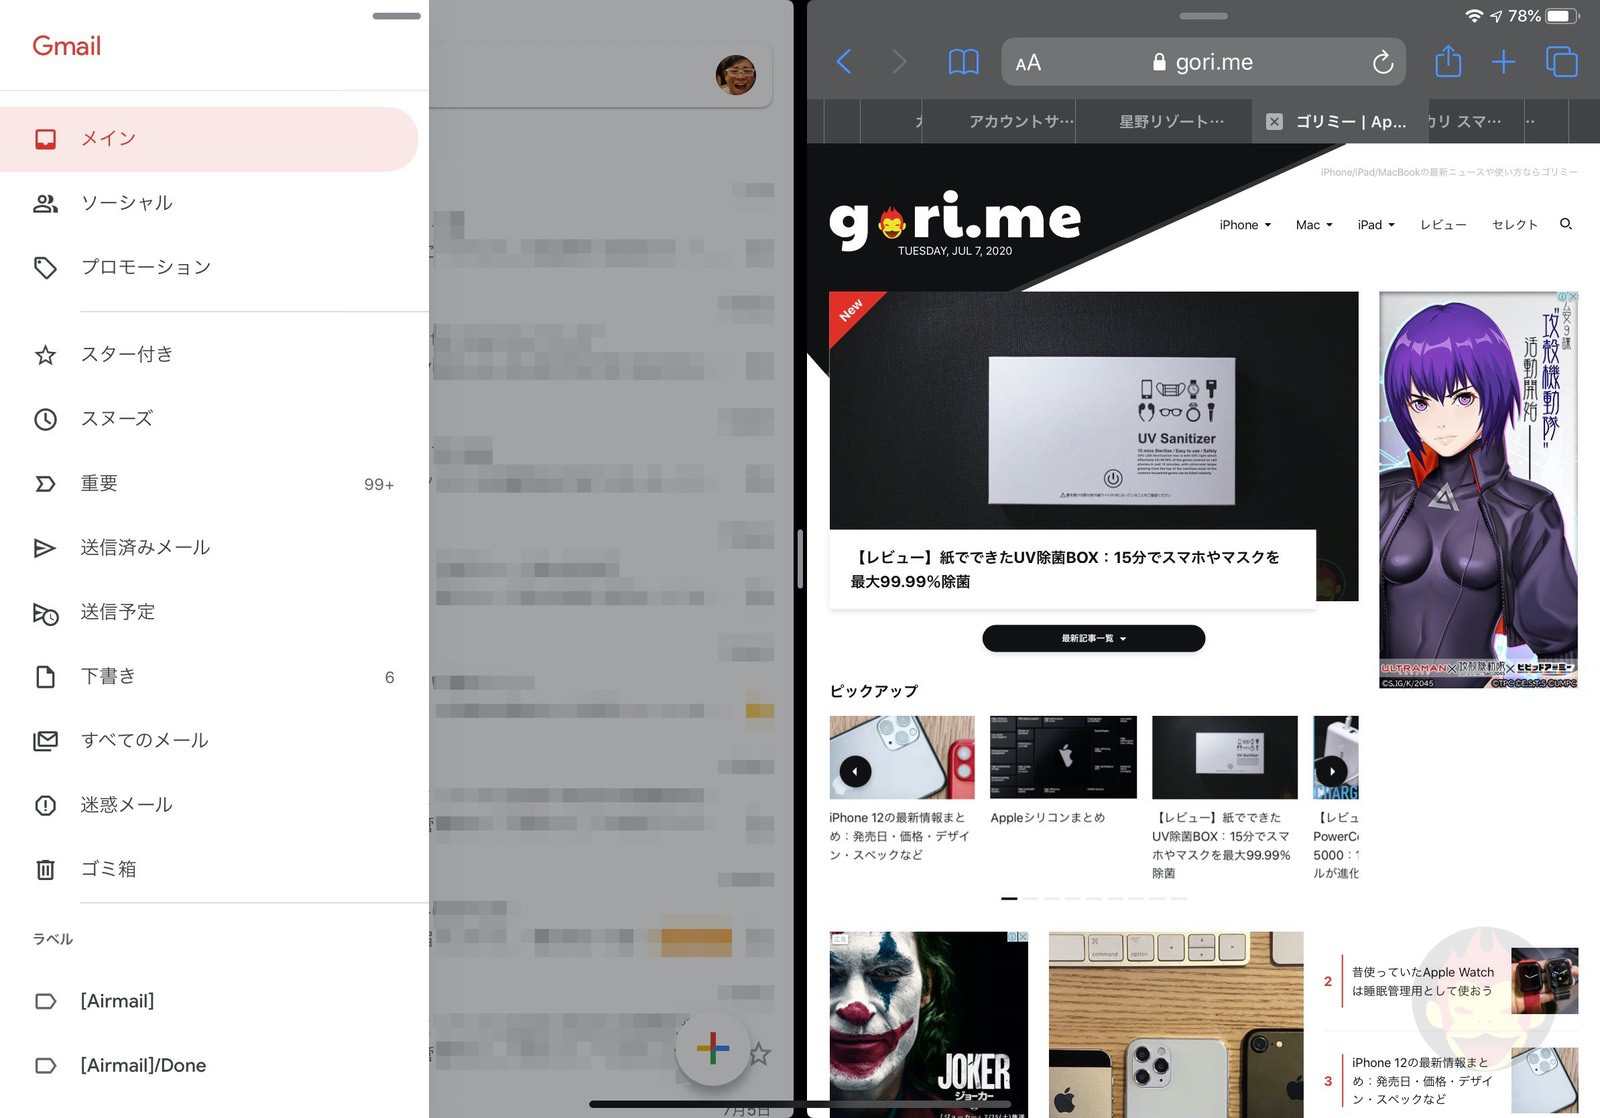 Gmail App Split View ScreenShot 01